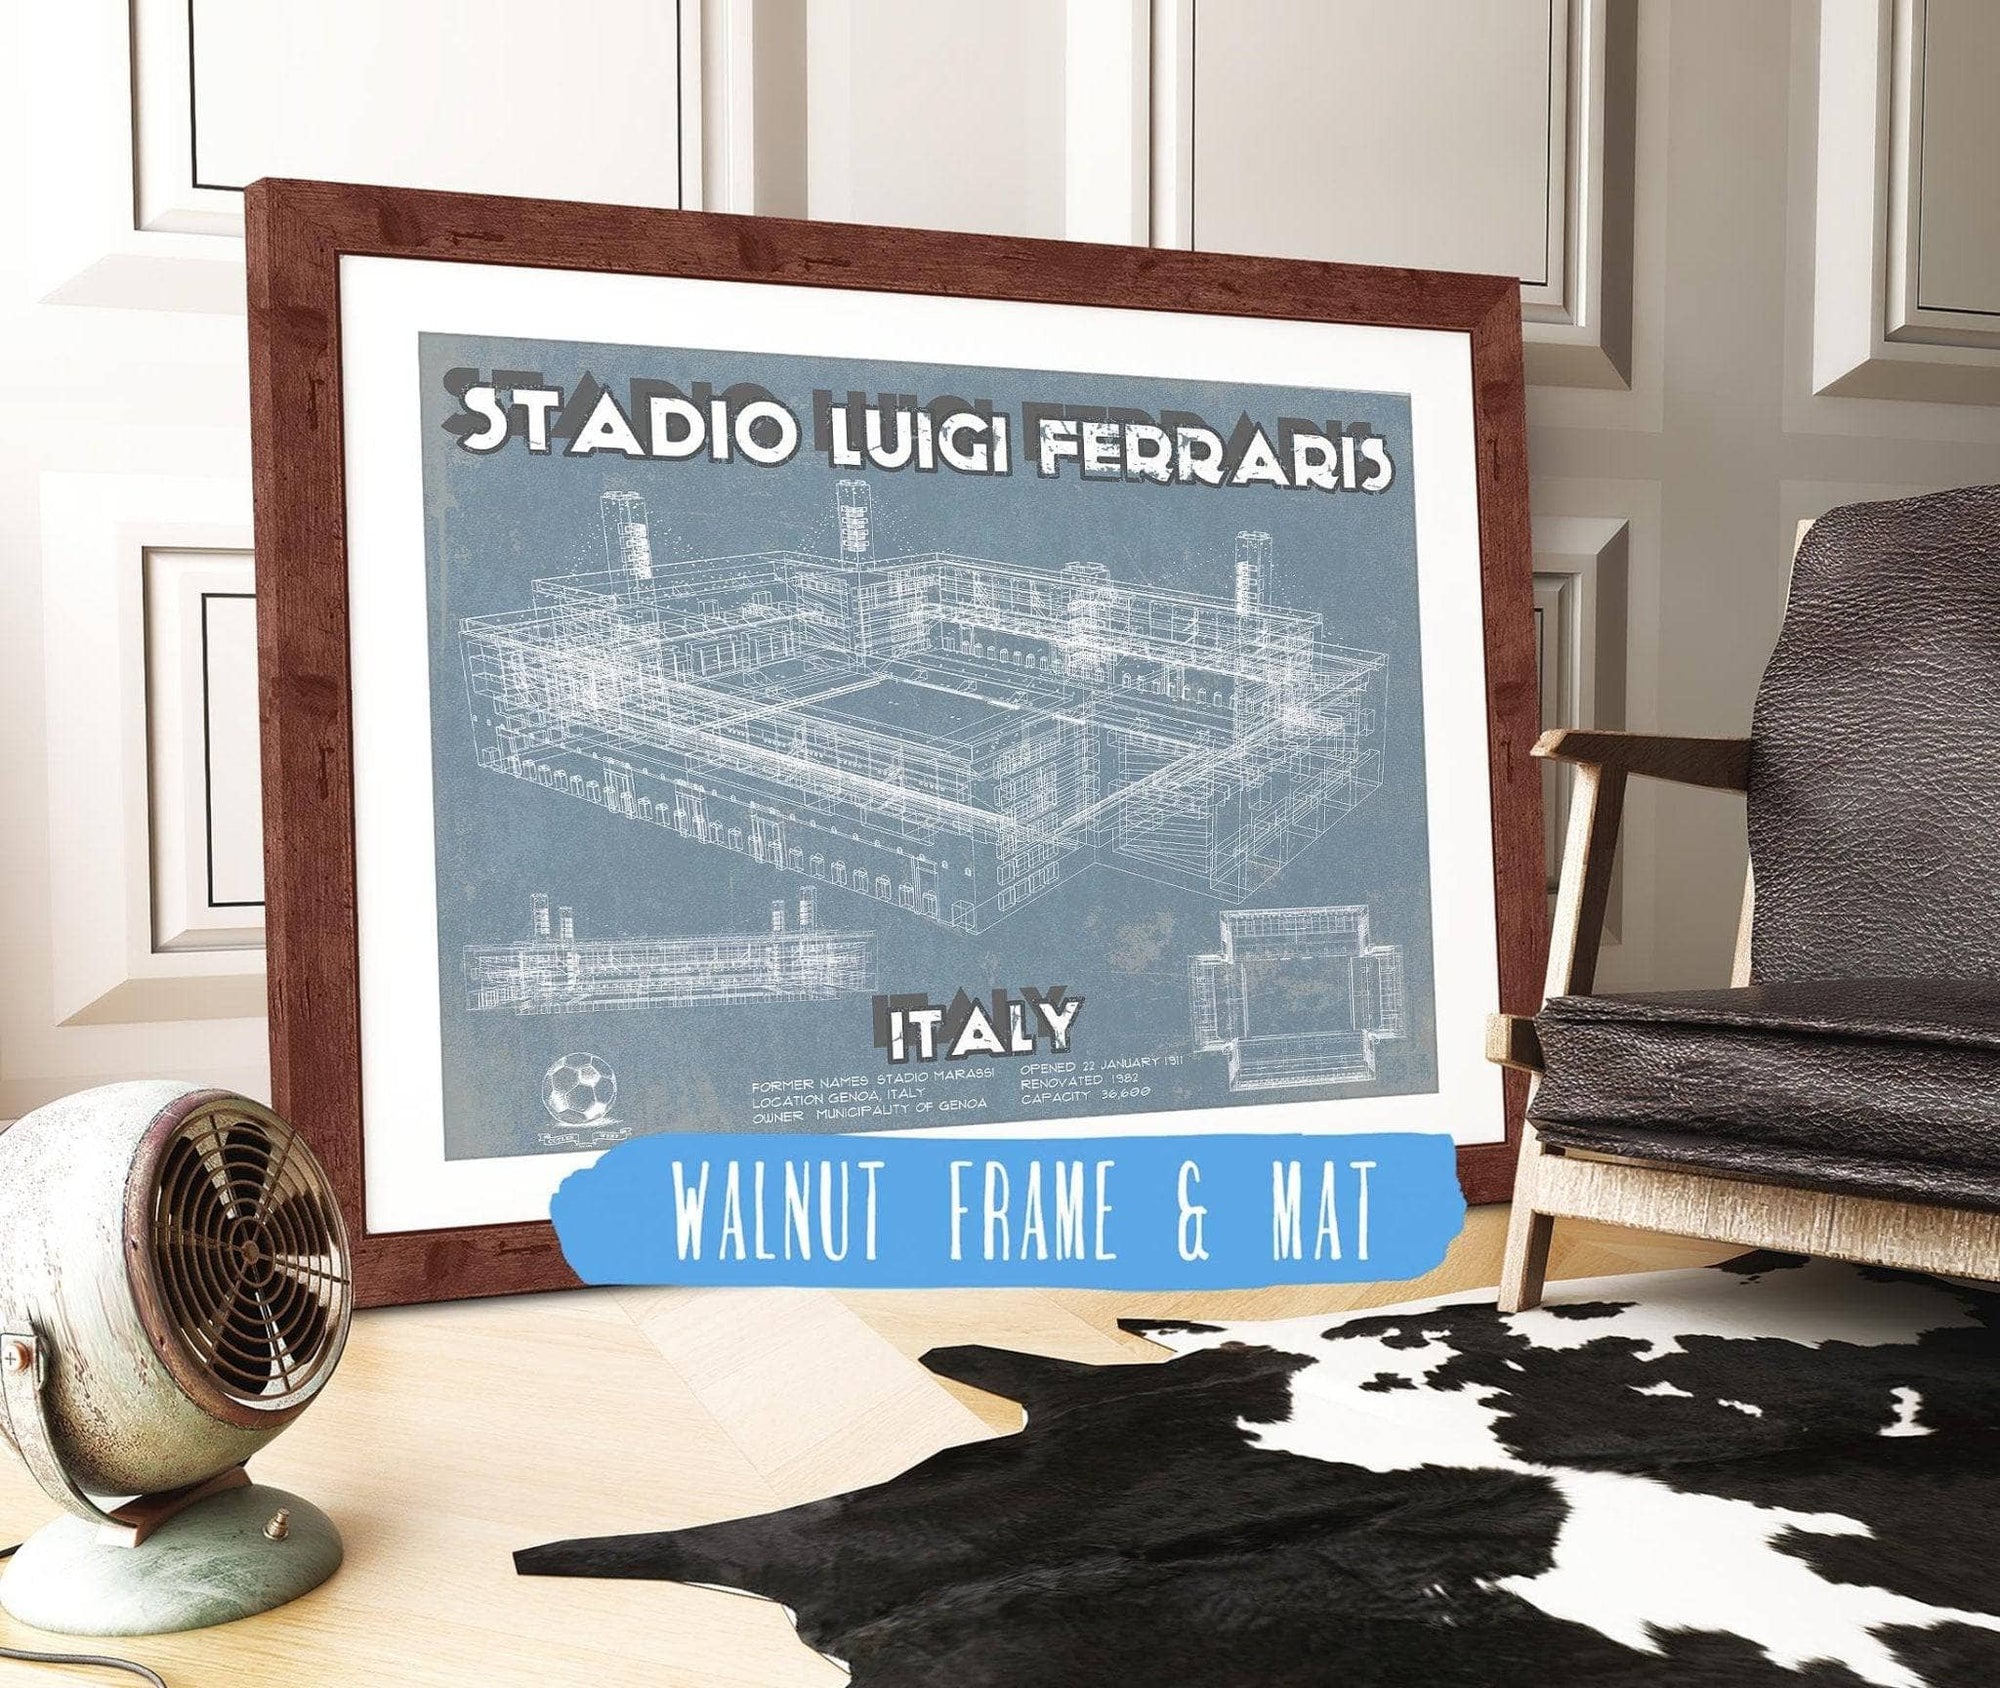 Cutler West Soccer Collection 14" x 11" / Walnut Frame & Mat Genoa C.F.C. Italy Football Stadio Luigi Ferraris Stadium Soccer Print 788218978_14514